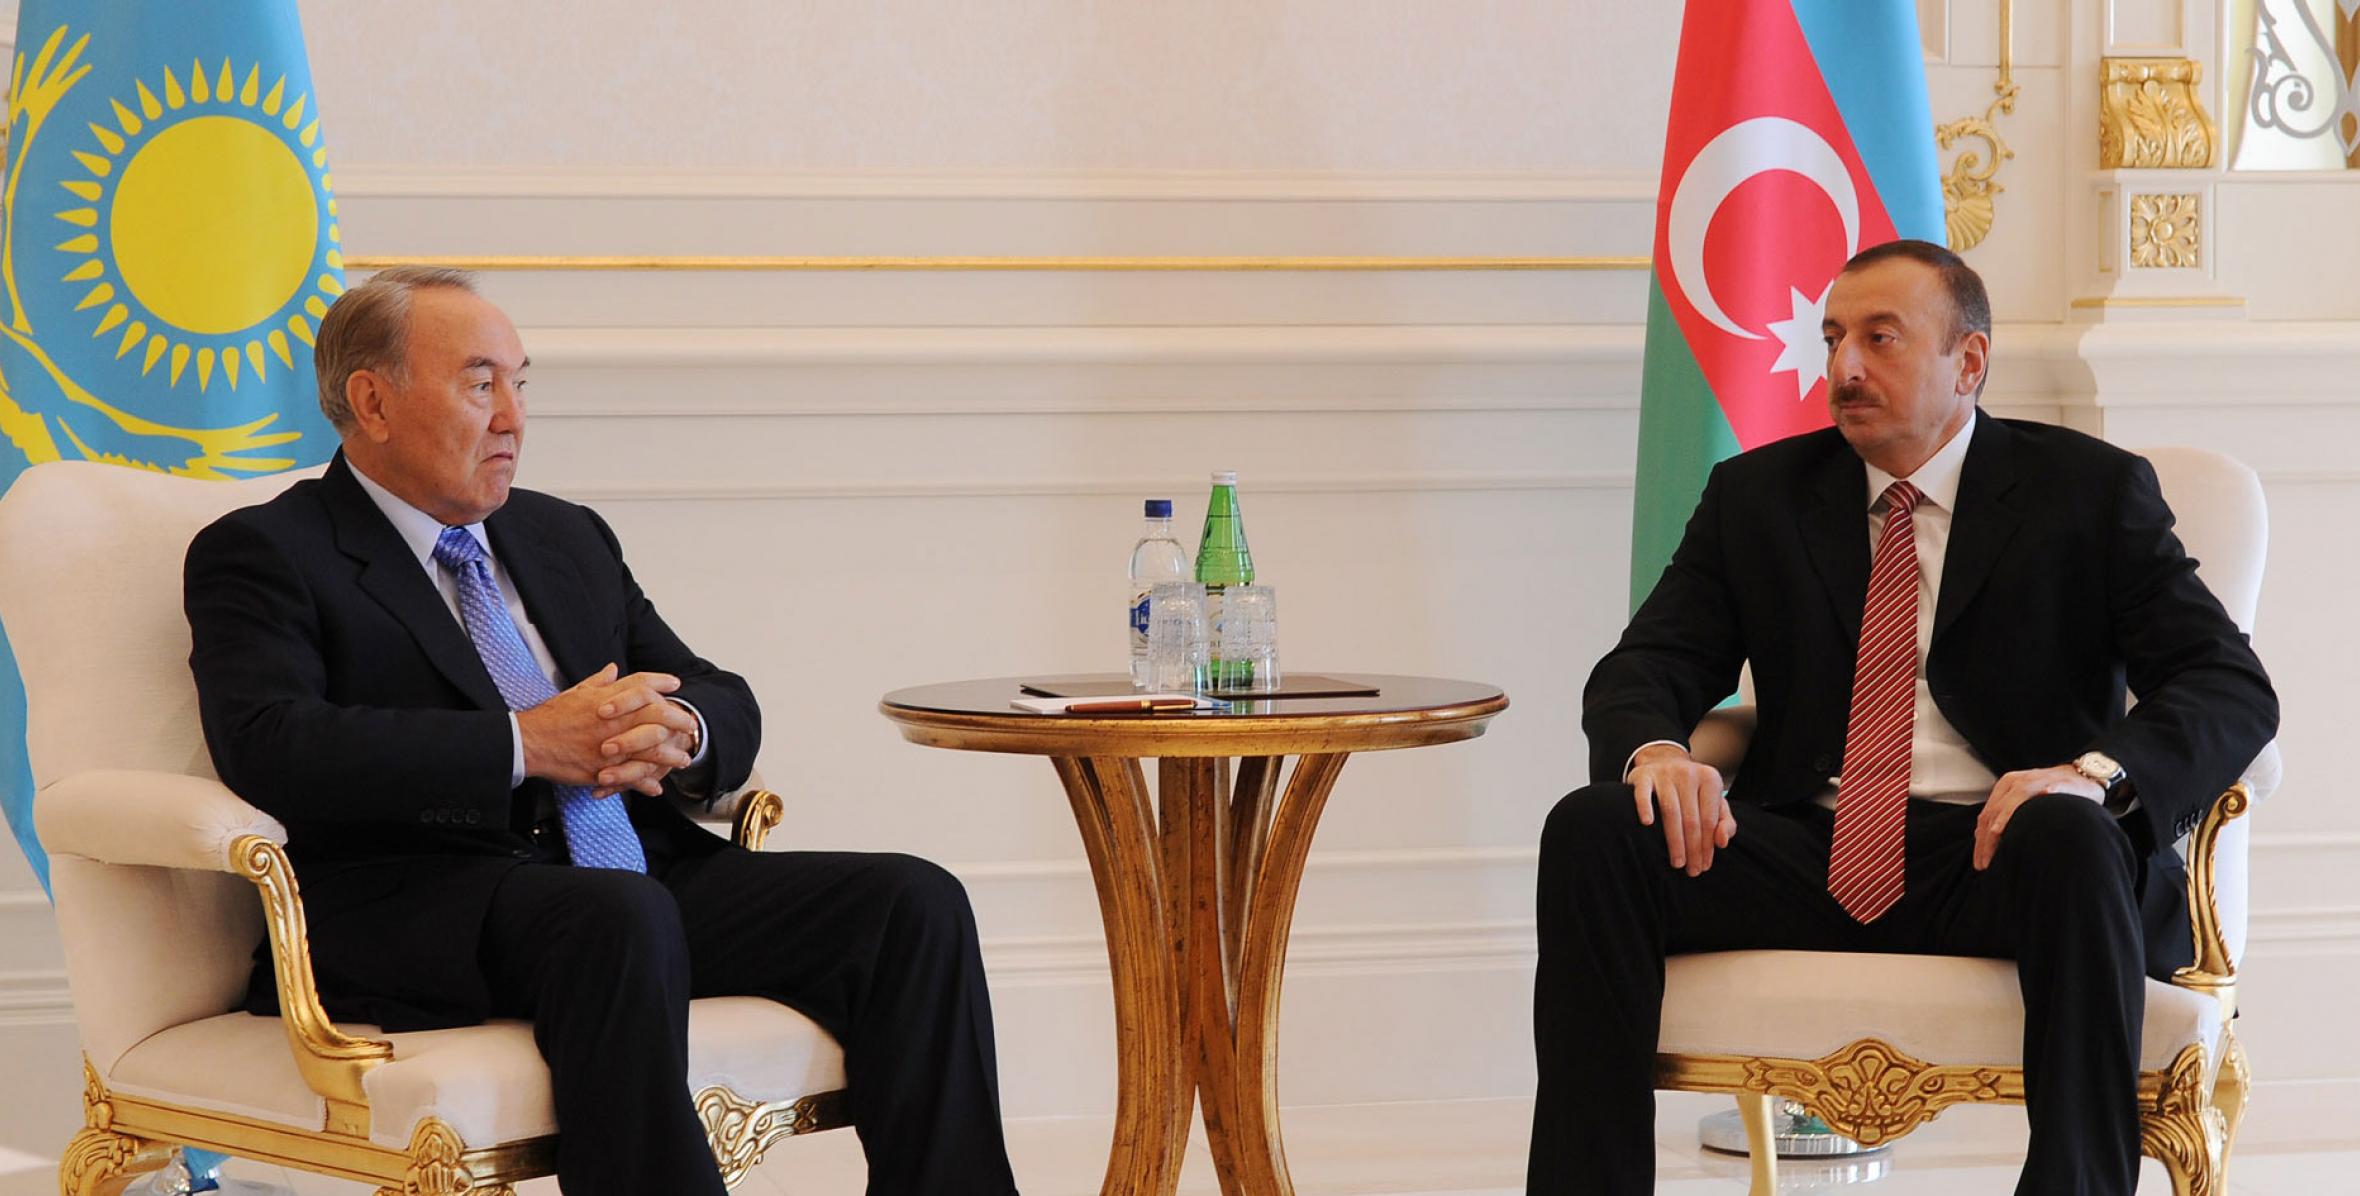 Ilham Aliyev and President of Kazakhstan Nursultan Nazarbayev had a meeting